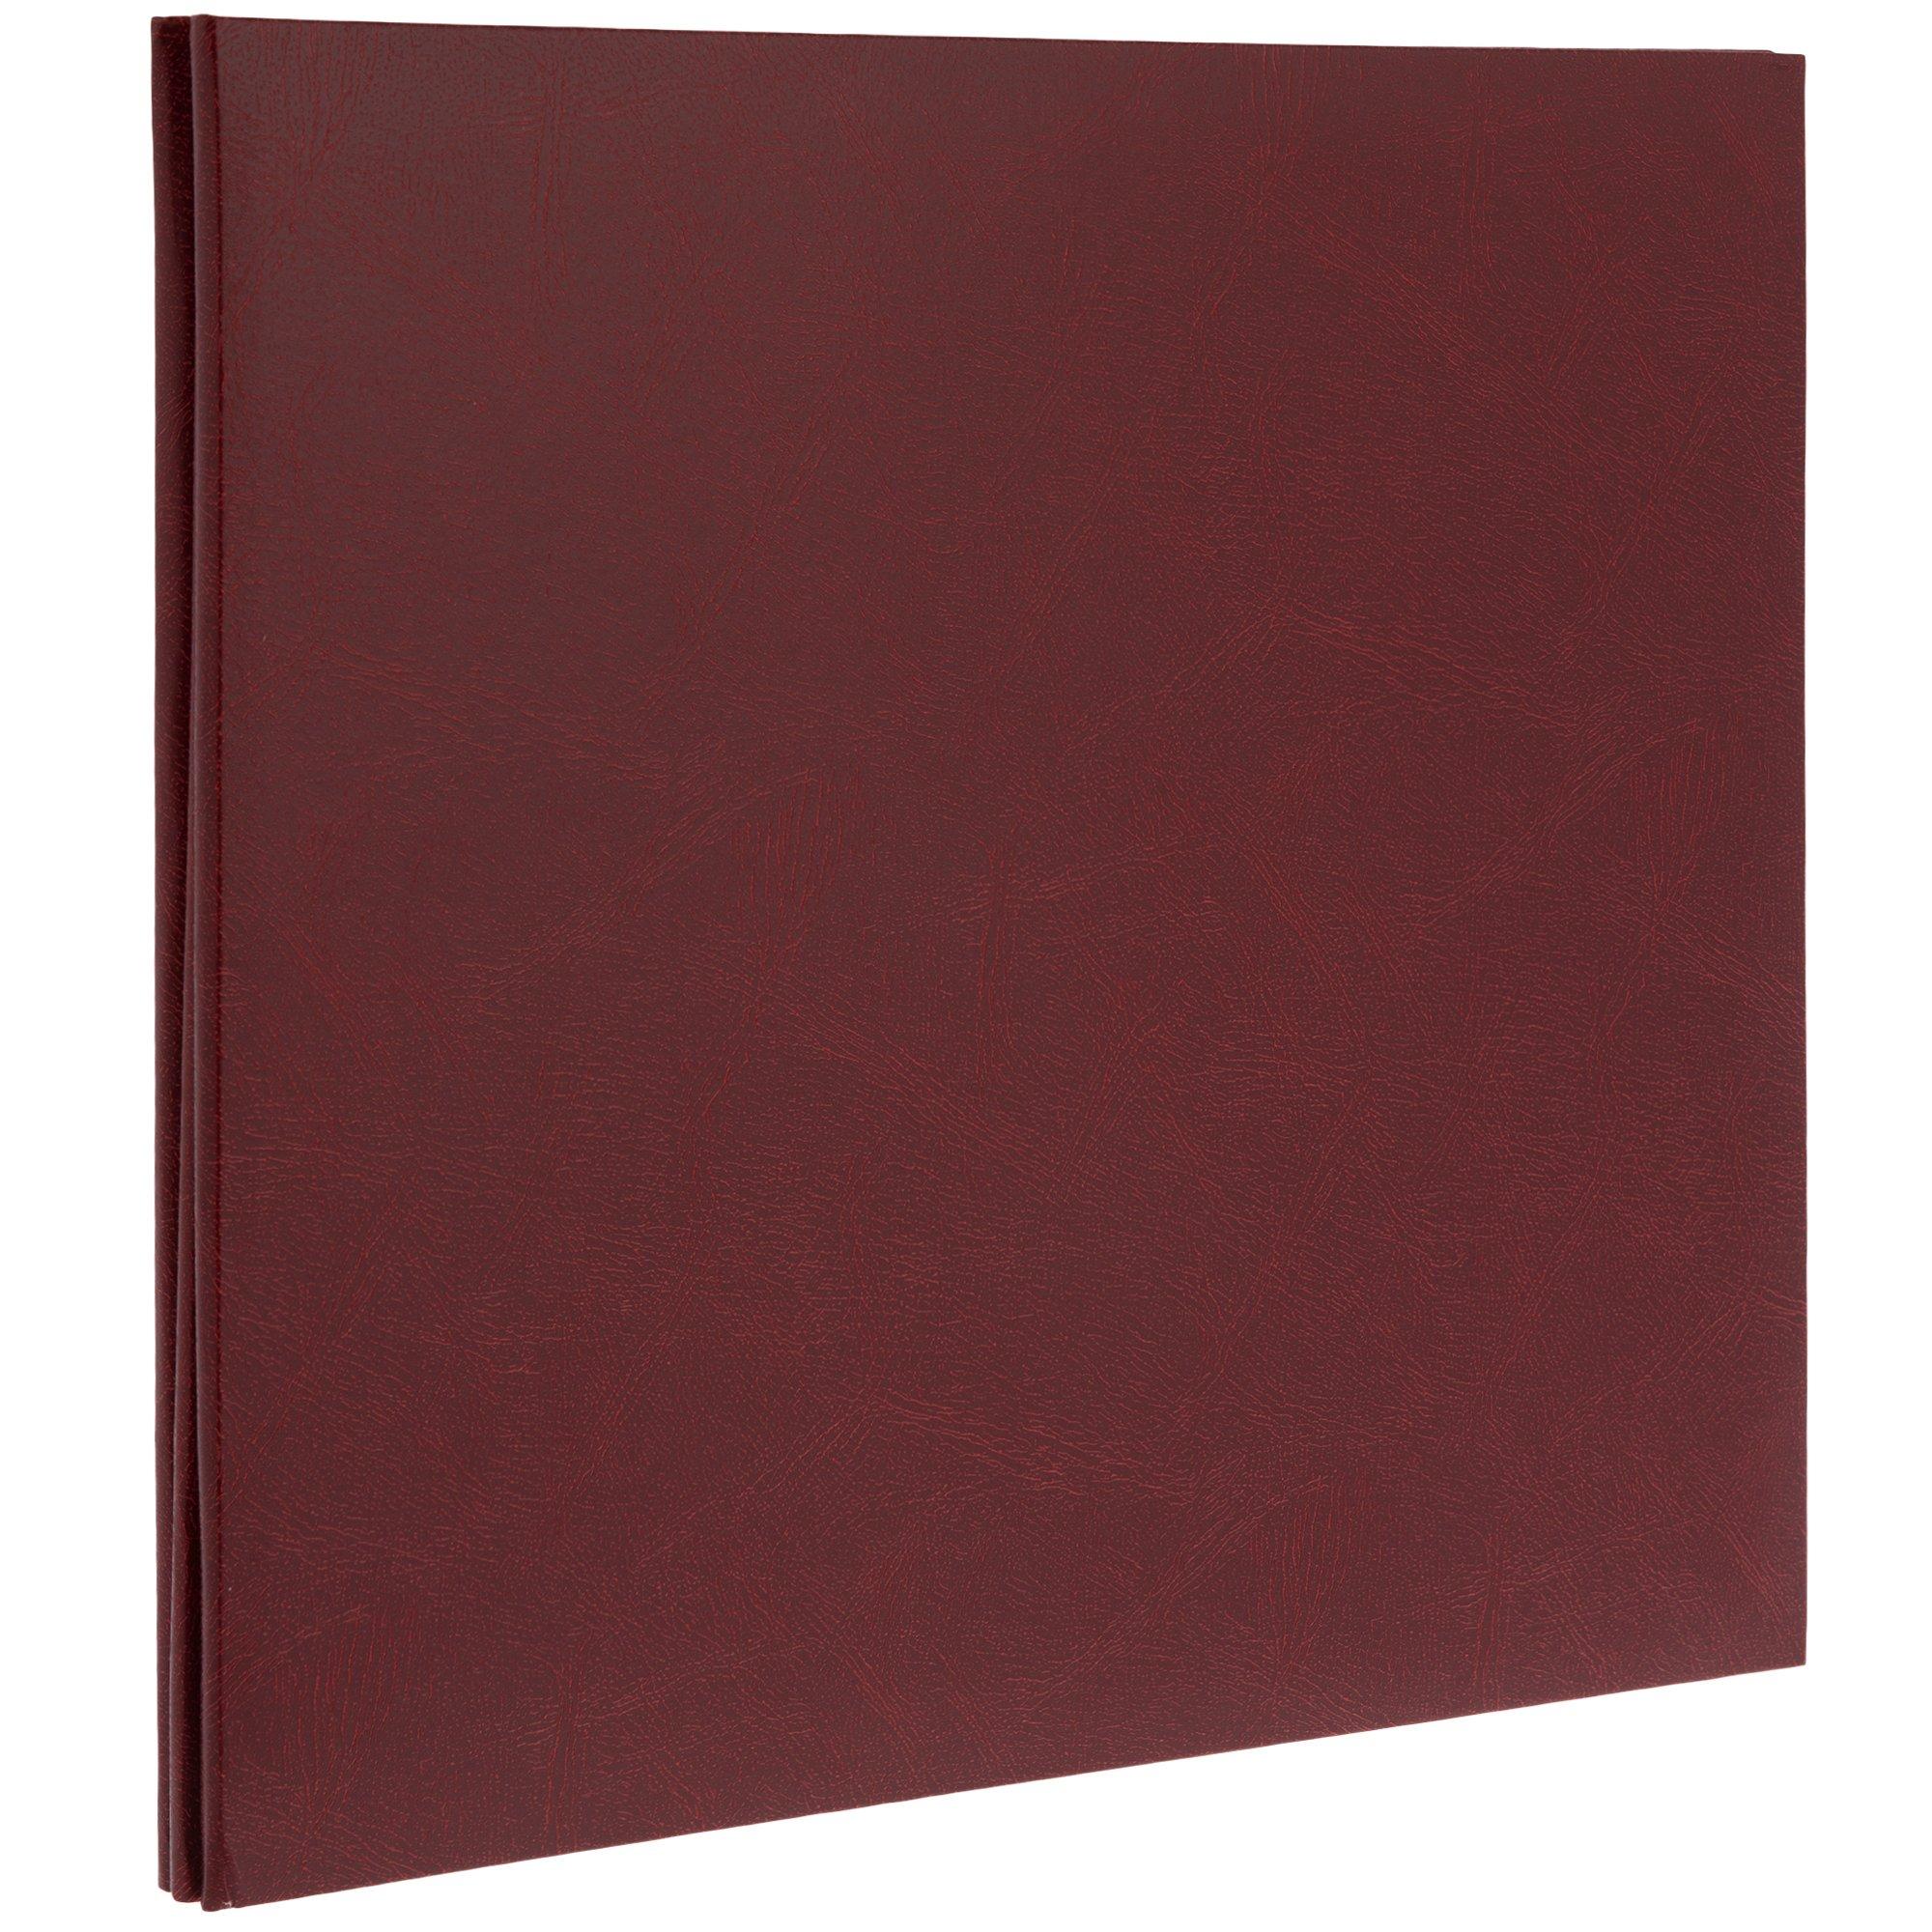 Hardcover Kraft Scrapbook Album (8 x 8 Inches, 40 Sheets), PACK - Kroger